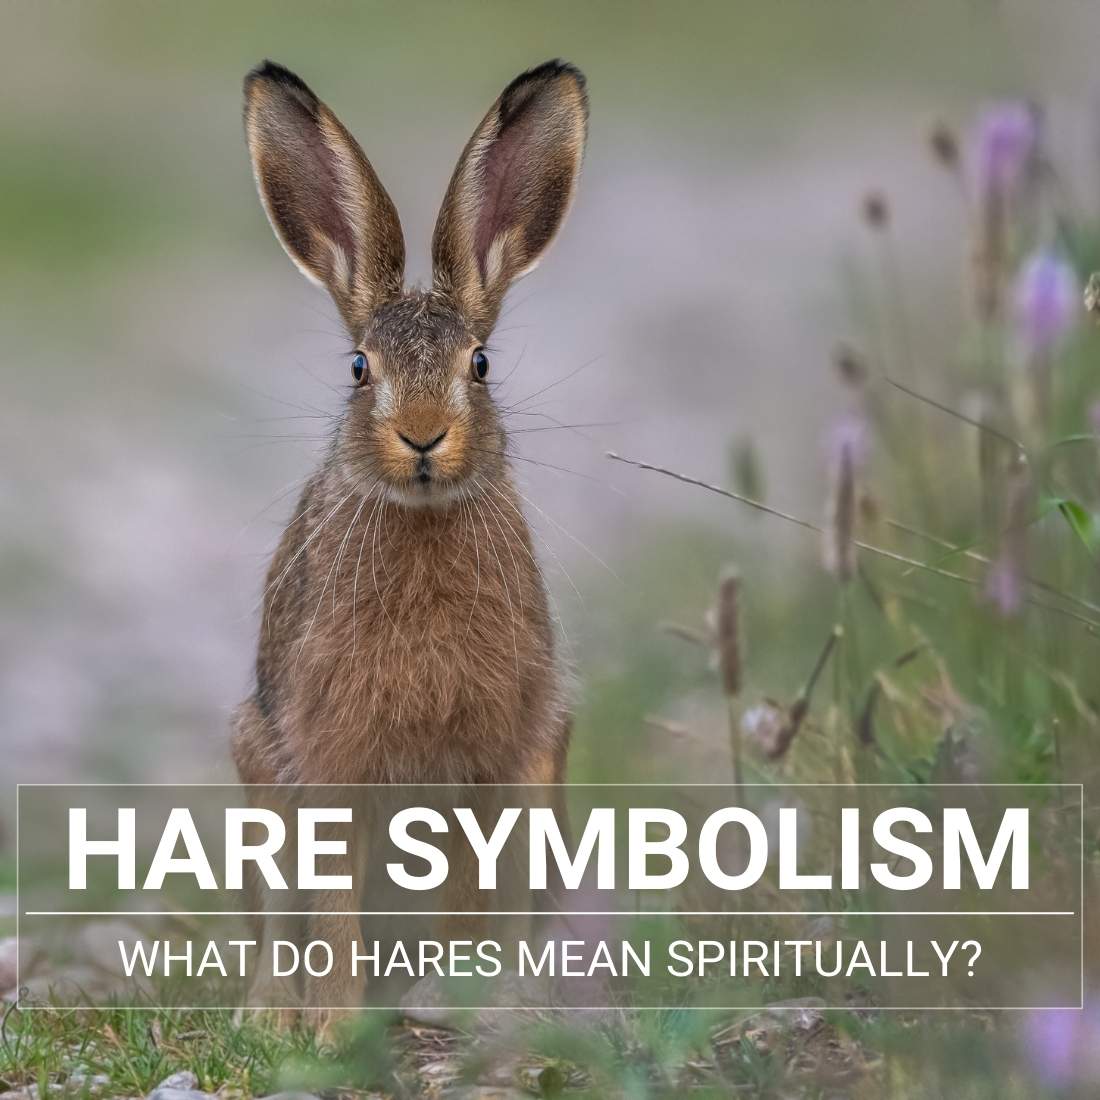 Hare symbolism